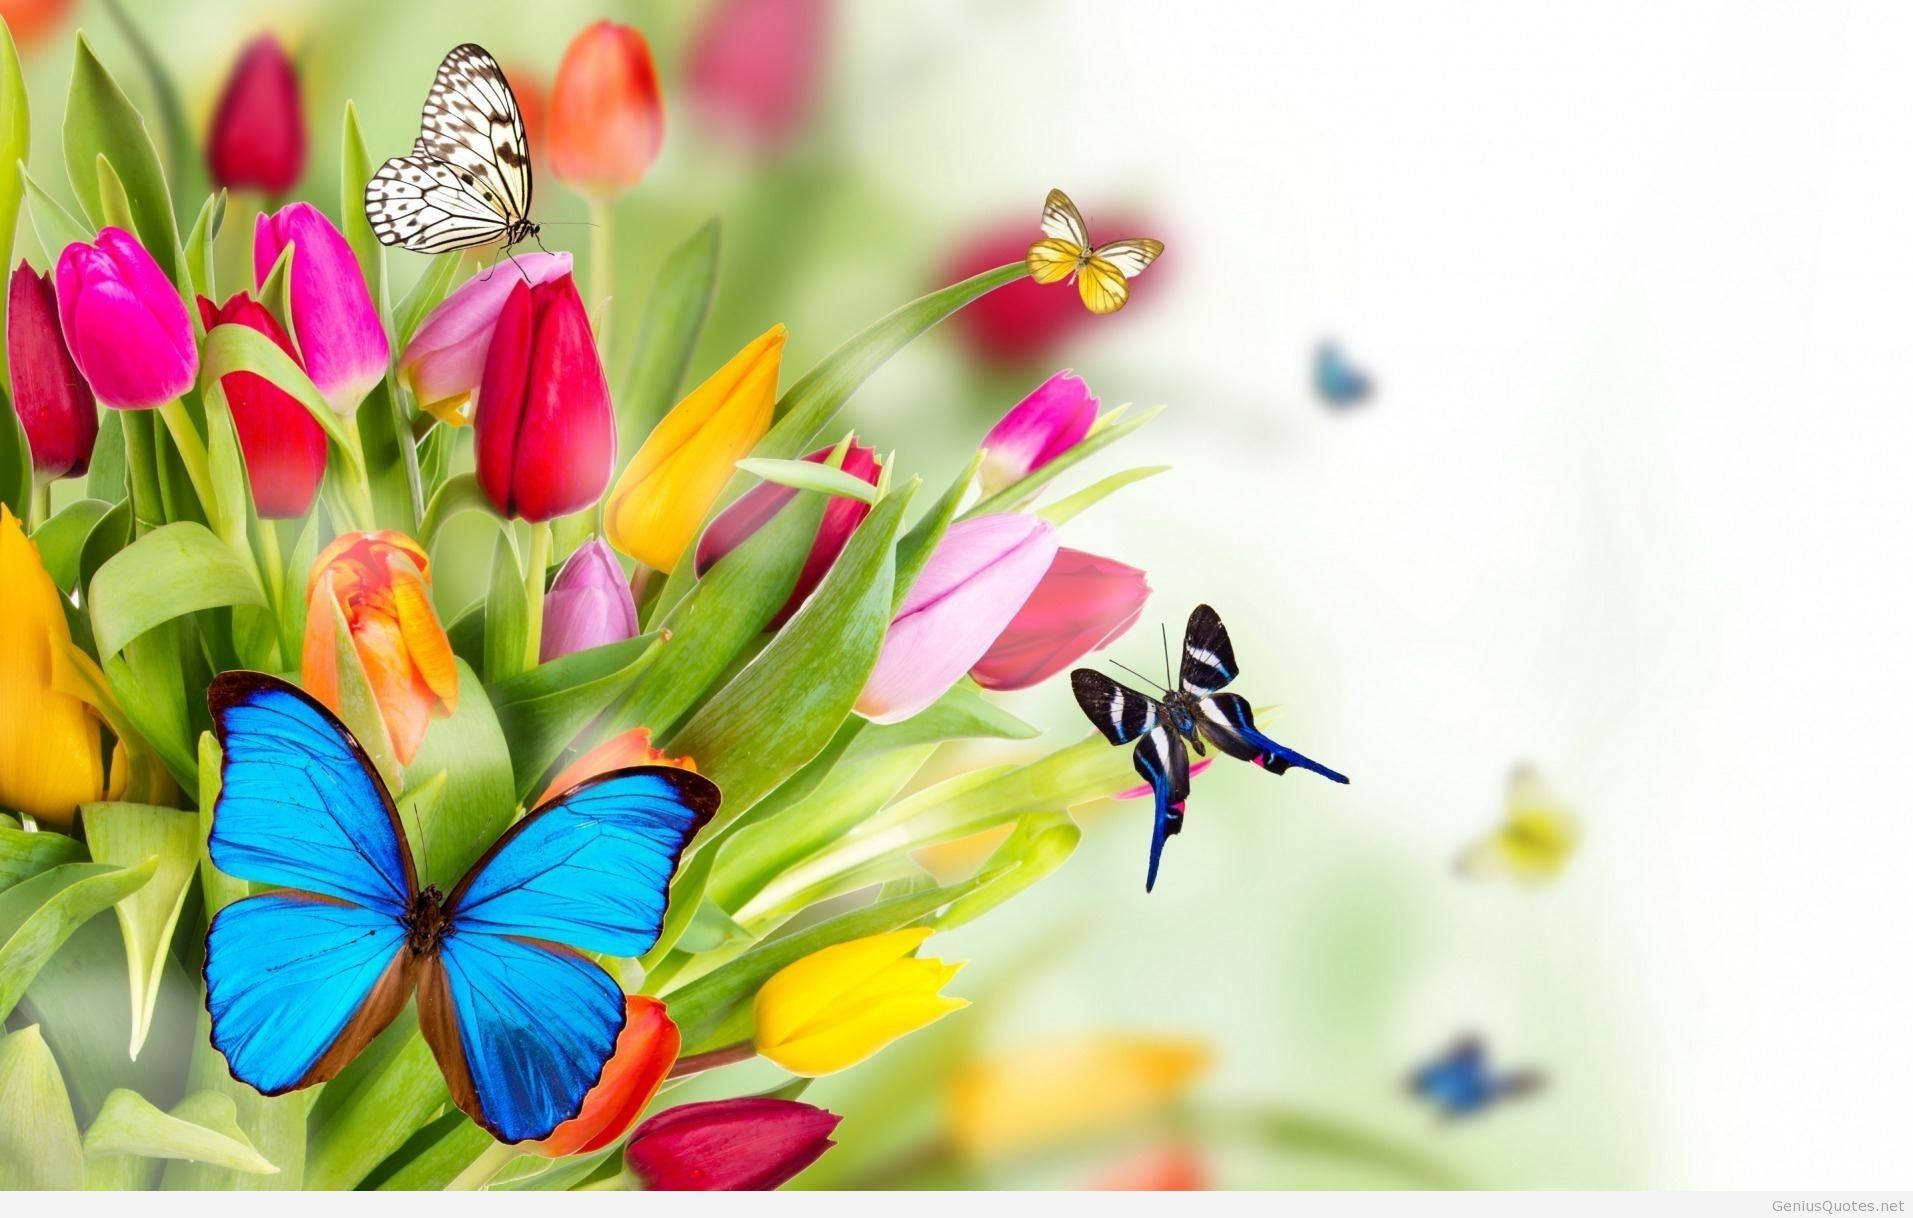 Spring Butterflies Background